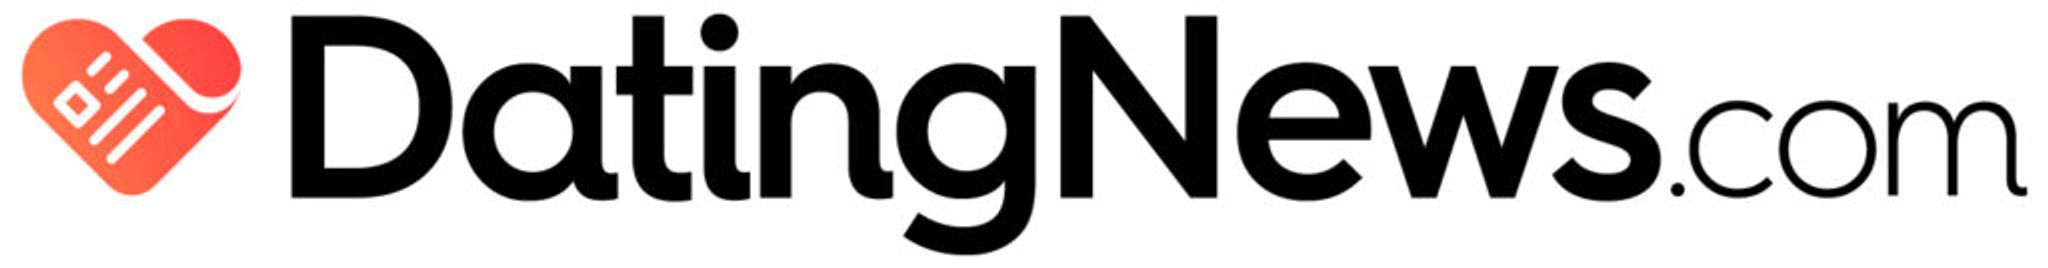 datingnews-logo